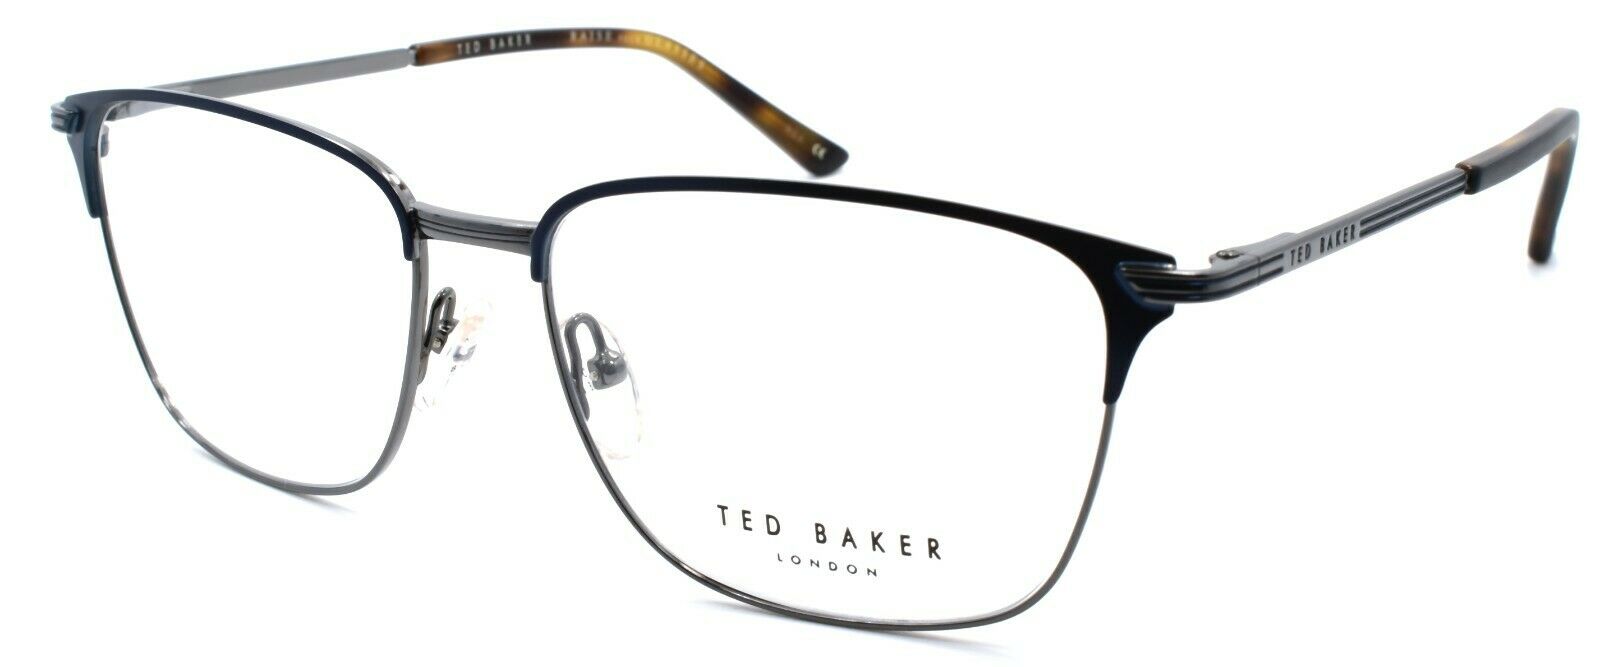 1-Ted Baker Smuggler 4235 609 Men's Eyeglasses Frames 55-16-140 Navy / Gunmetal-4894327098705-IKSpecs